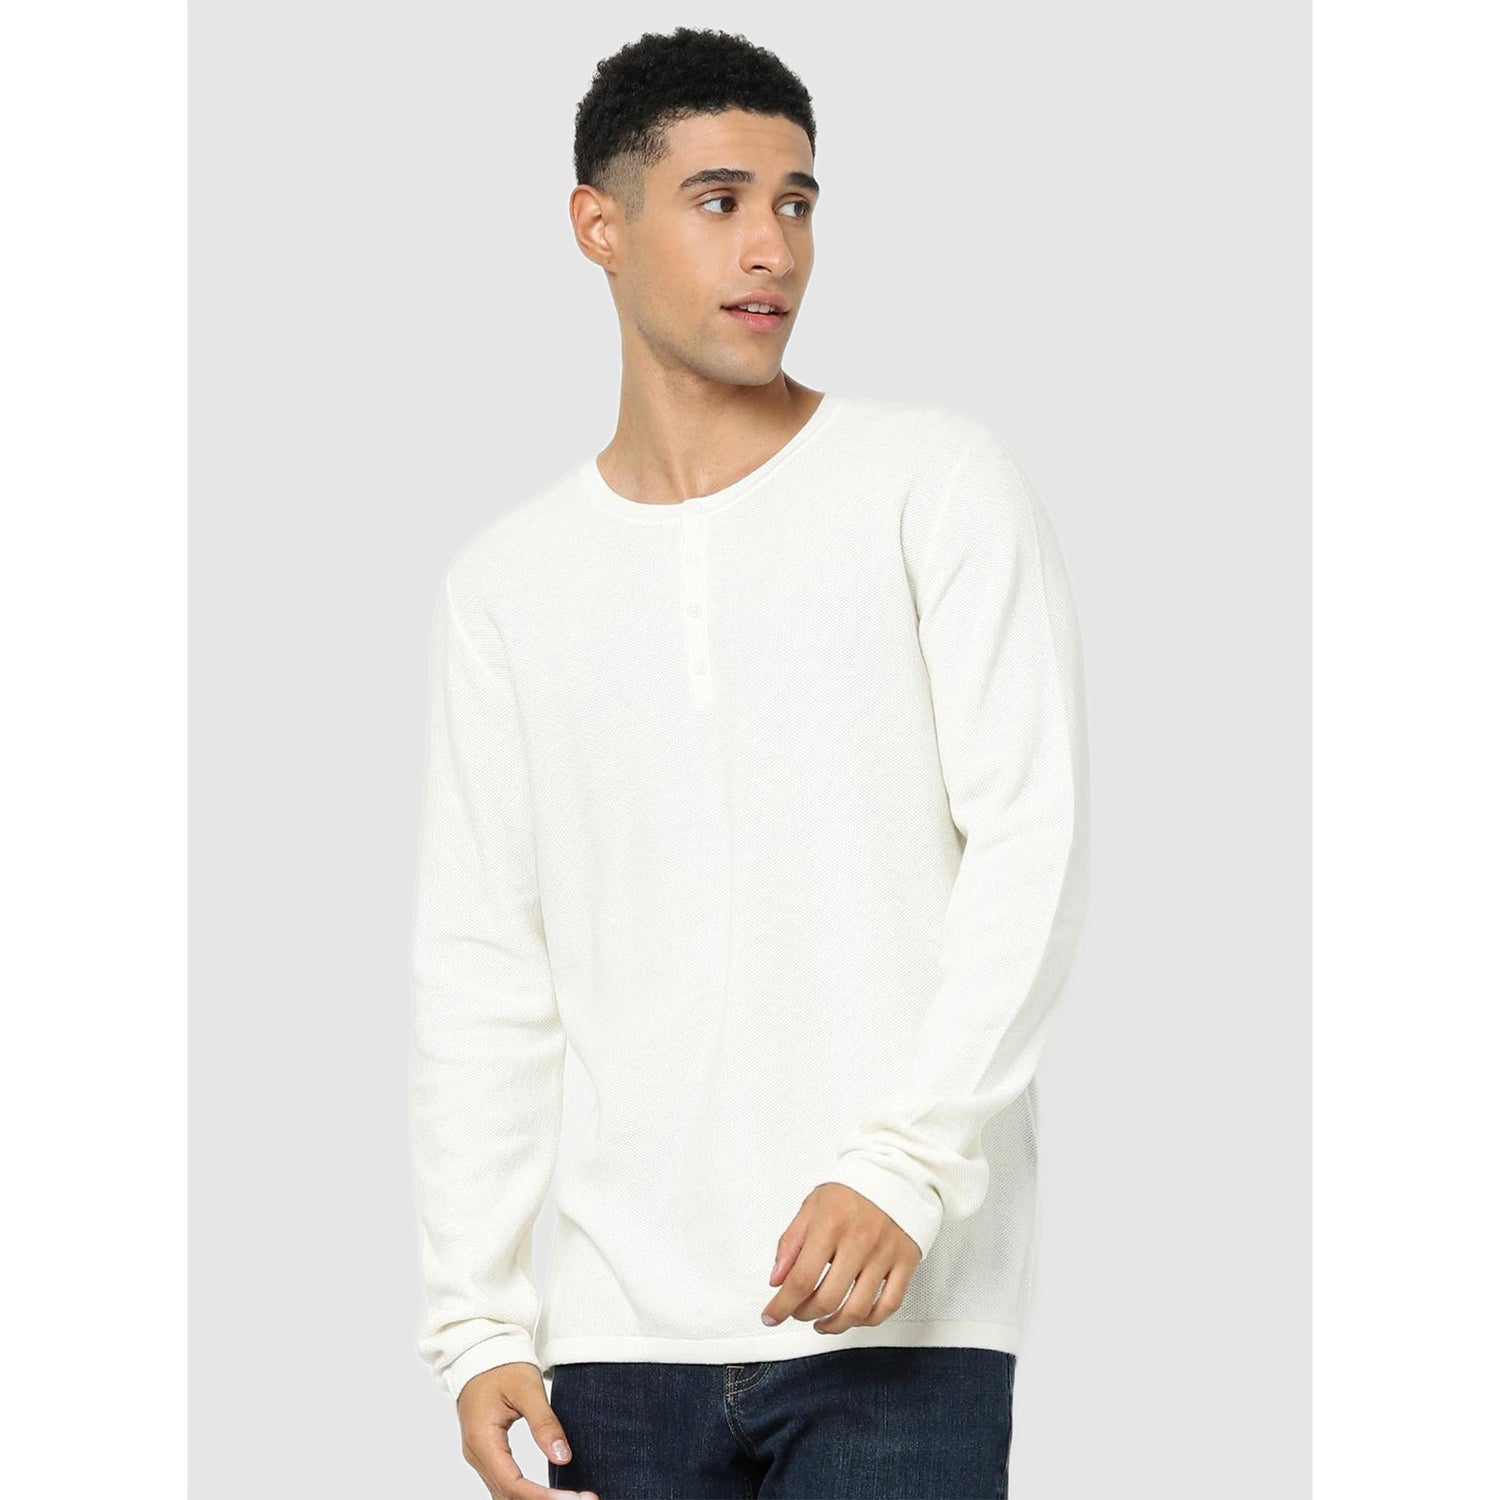 Off White Grey Solid Regular Fit Cotton Pullover Sweater (CEHENPIK)